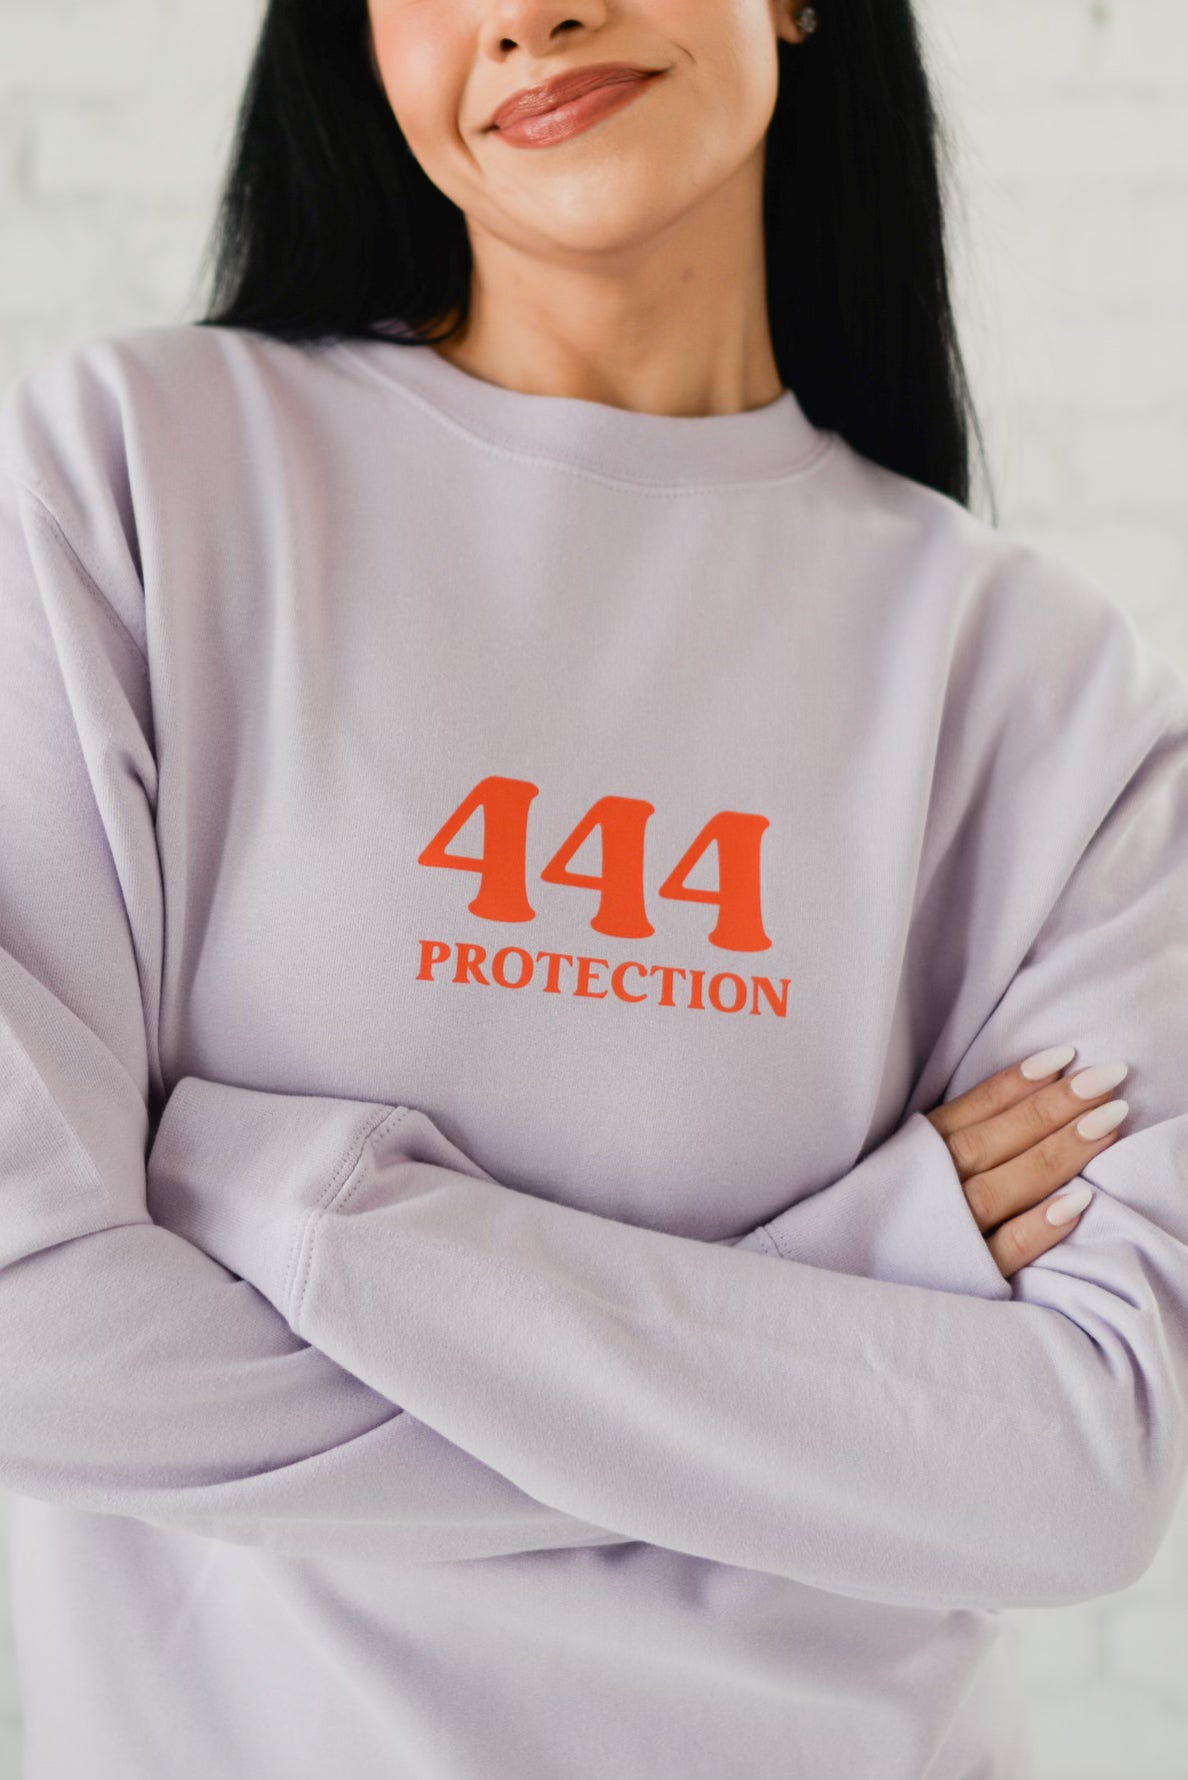 444 Protection Crewneck